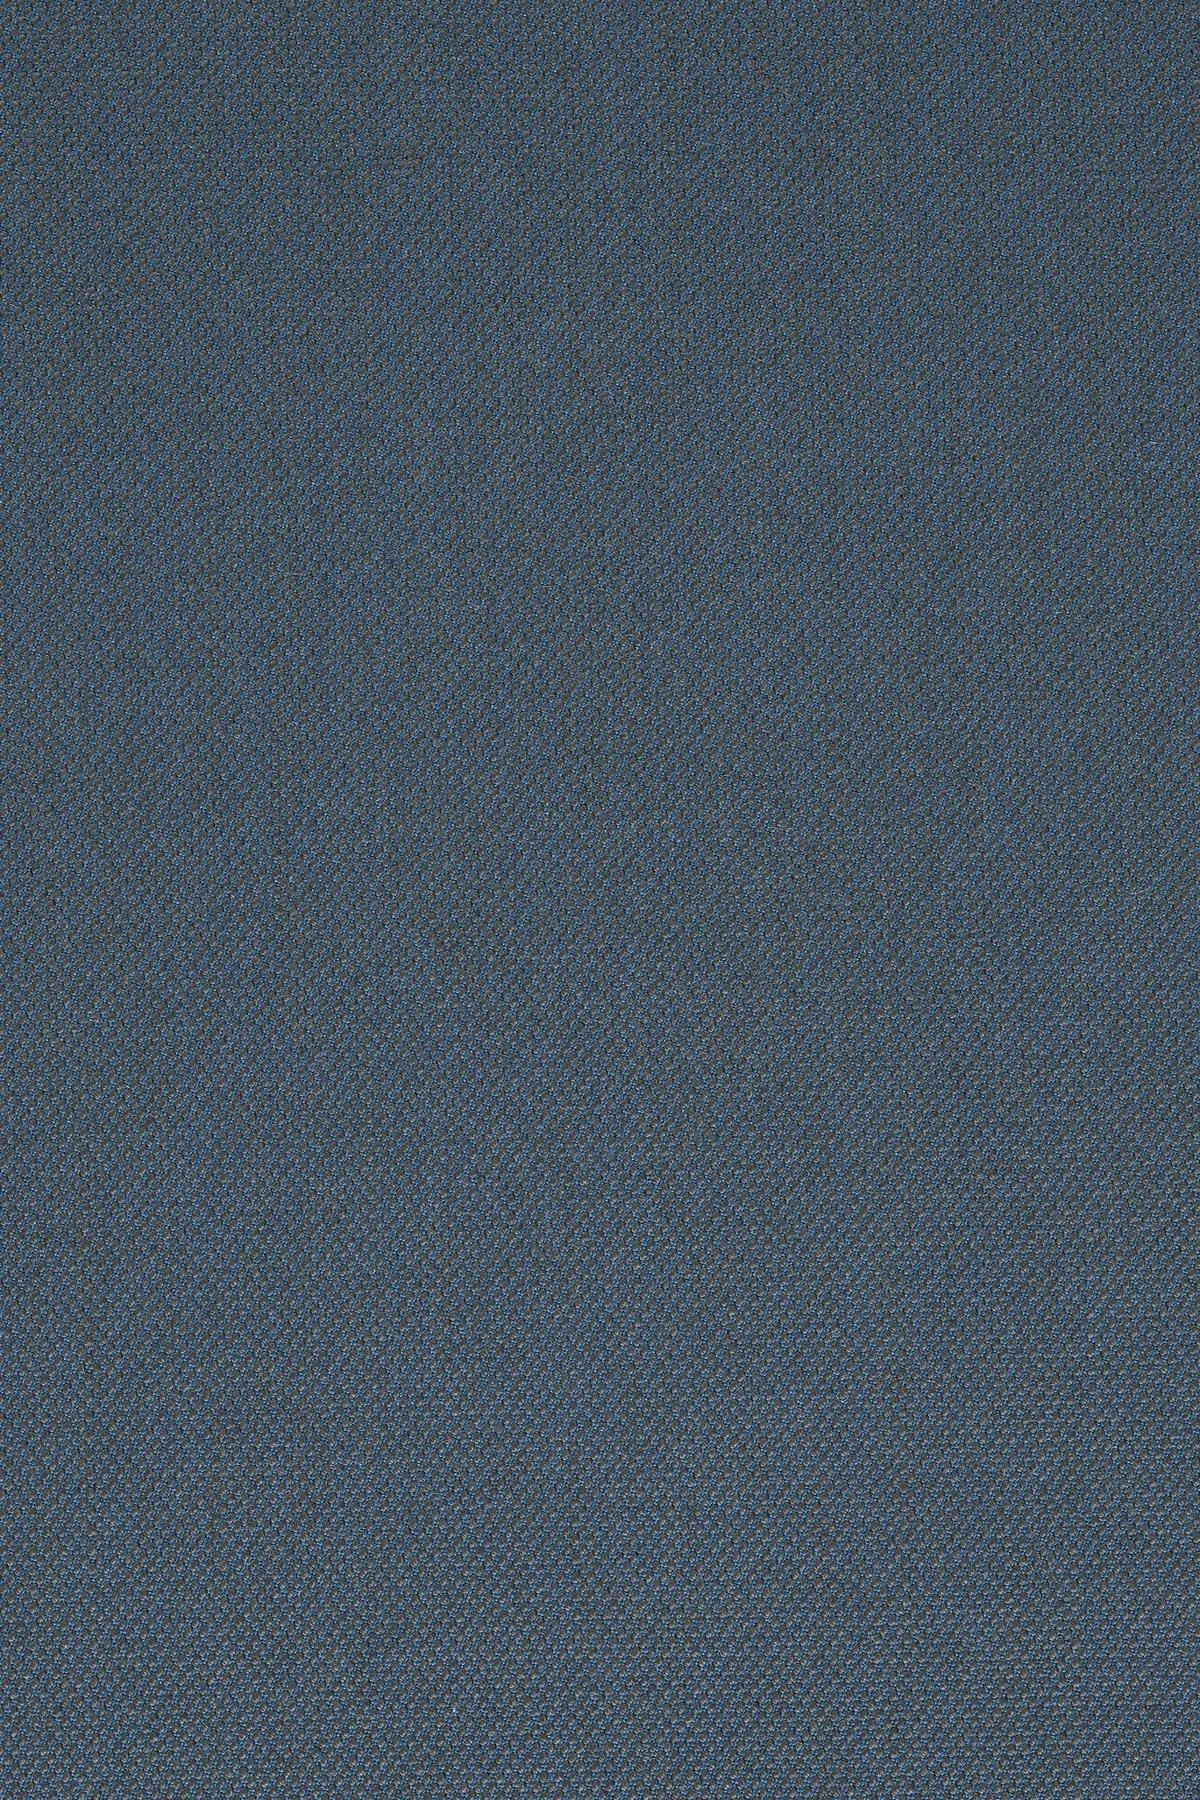 Fabric sample Steelcut Trio 3 756 blue